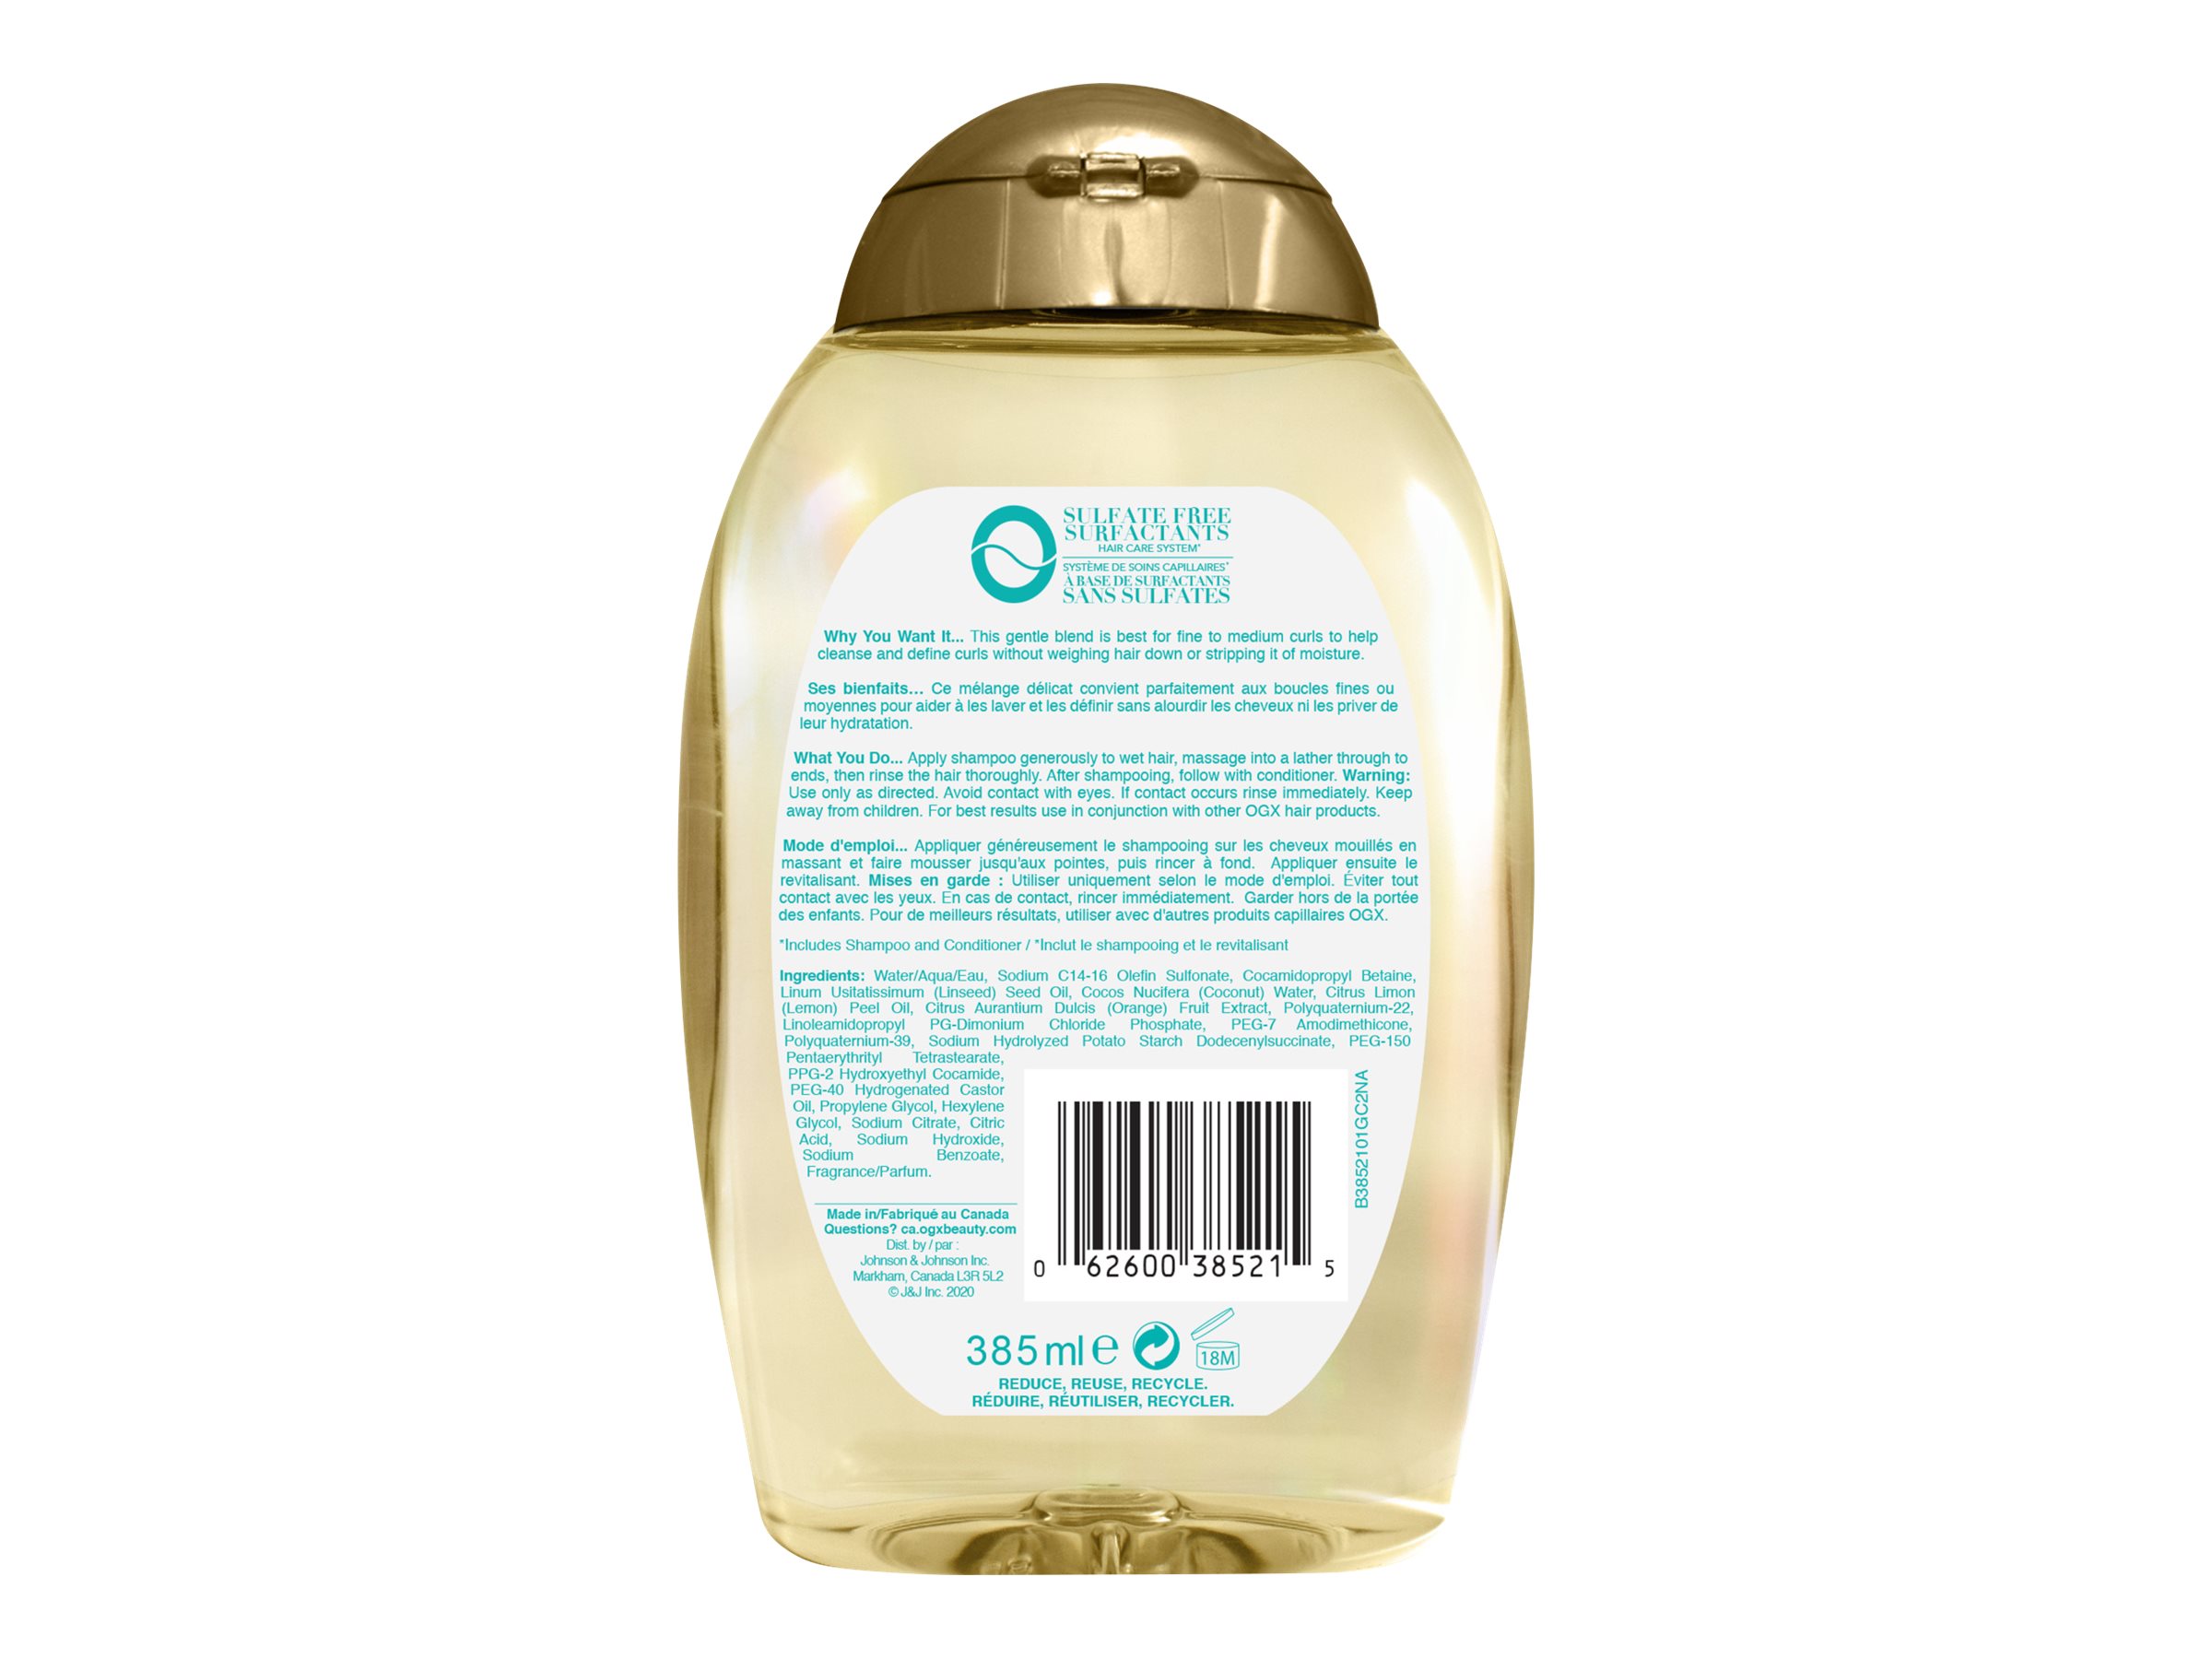 OGX Weightless Hydration + Coconut Water Shampoo